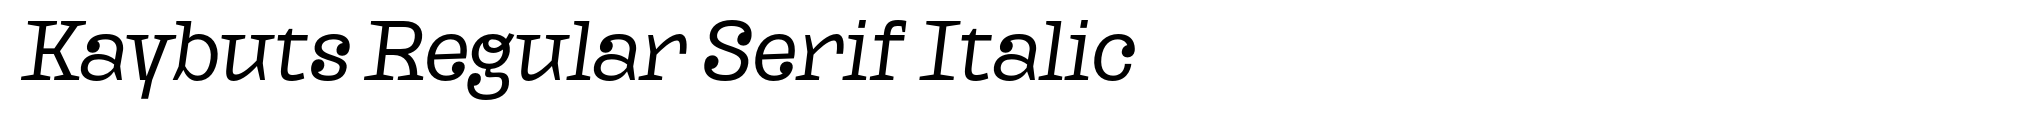 Kaybuts Regular Serif Italic image